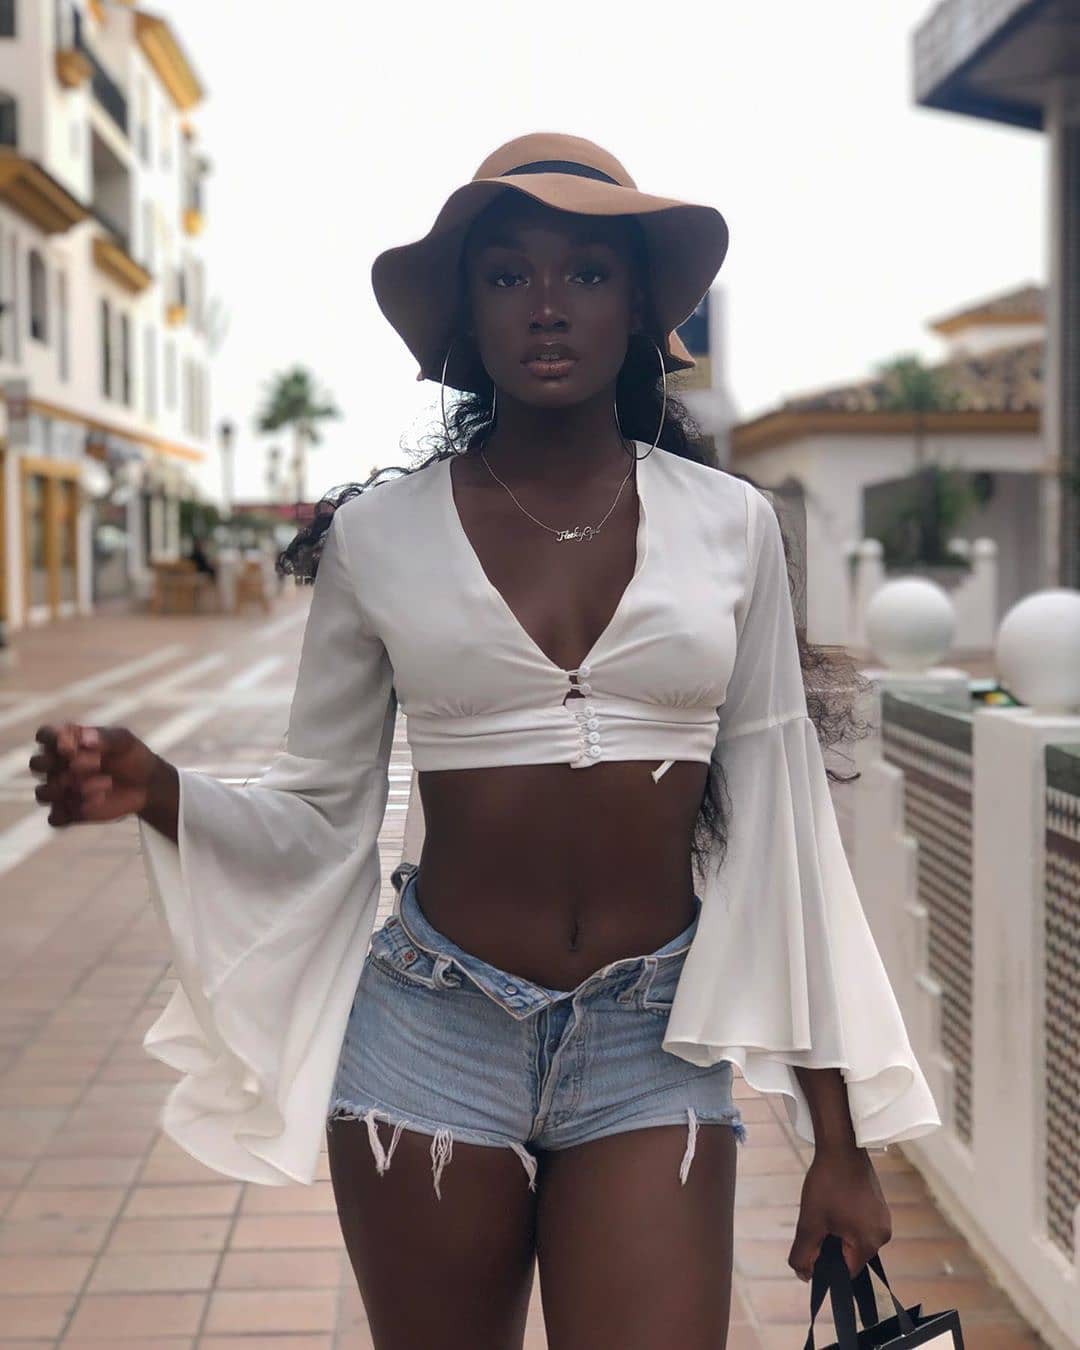 Curvy Black Young Model Pics: Hot Black Girls,  Cute Black Girls,  Hot Girls Instagram,  Instagram Hot Photo,  Sexy Black Girls,  Black Girls Instagram,  Black Girls Bikini Pics,  Hot Black Babes  